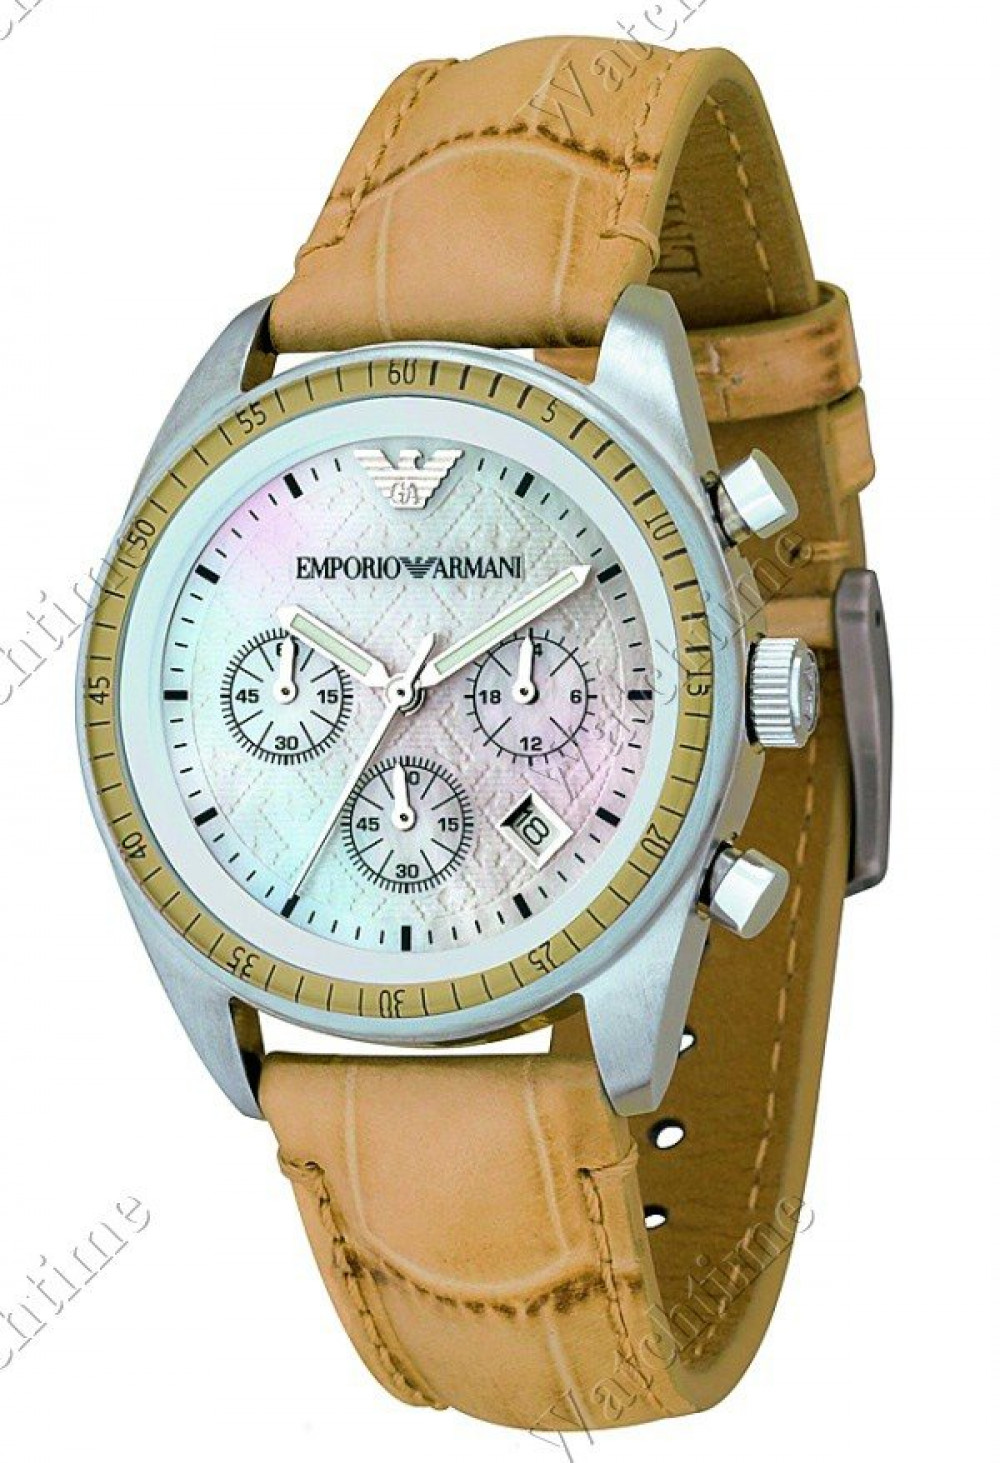 Zegarek firmy Emporio Armani, model AR 5665